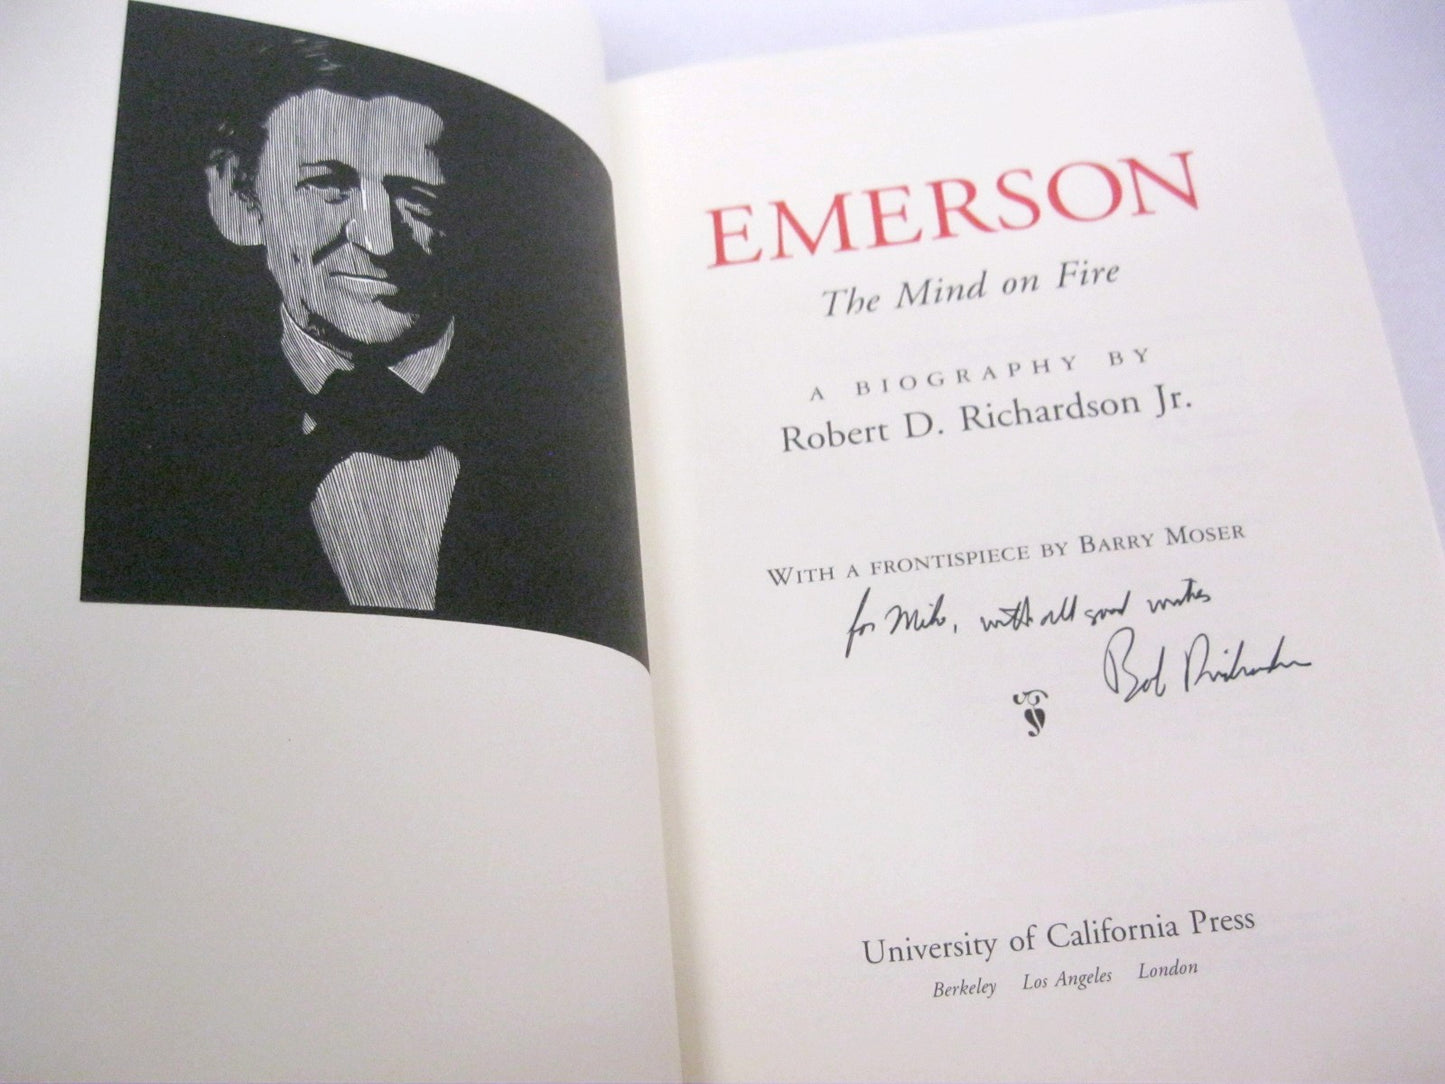 Emerson: Mind on Fire by Robert D Richardson Jr